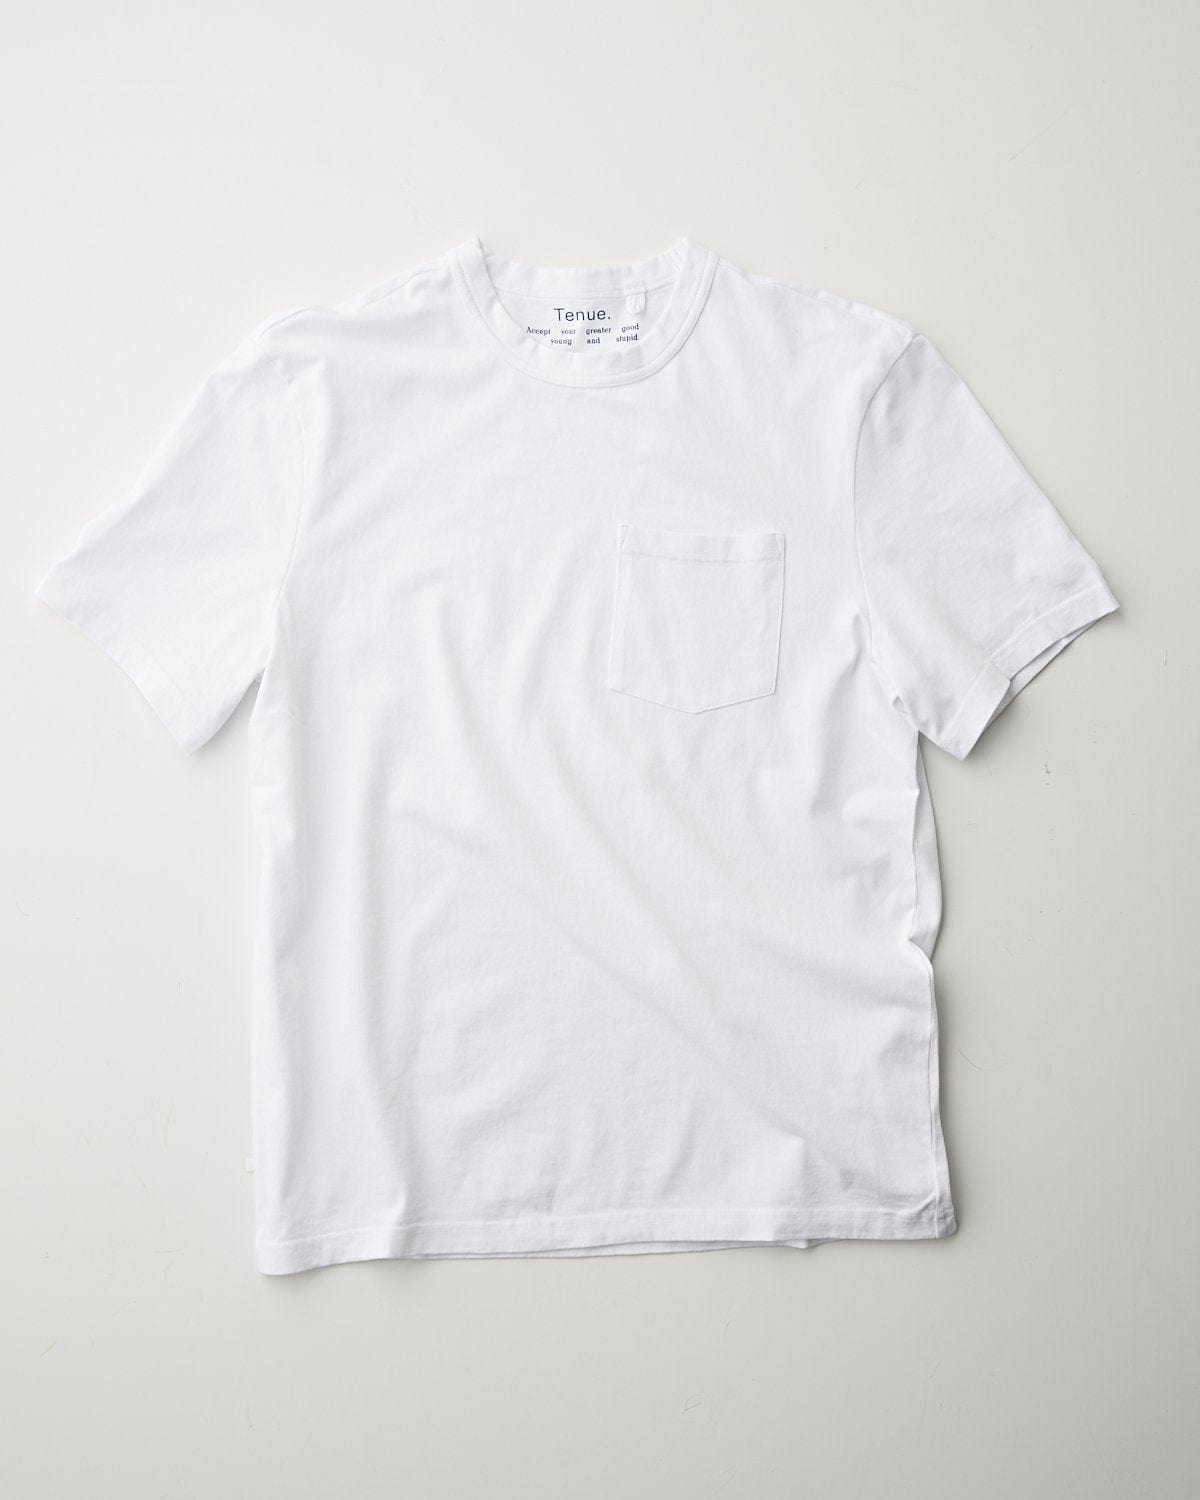 Tenue. 2-Pack John Jade & White T-shirt S/S Men